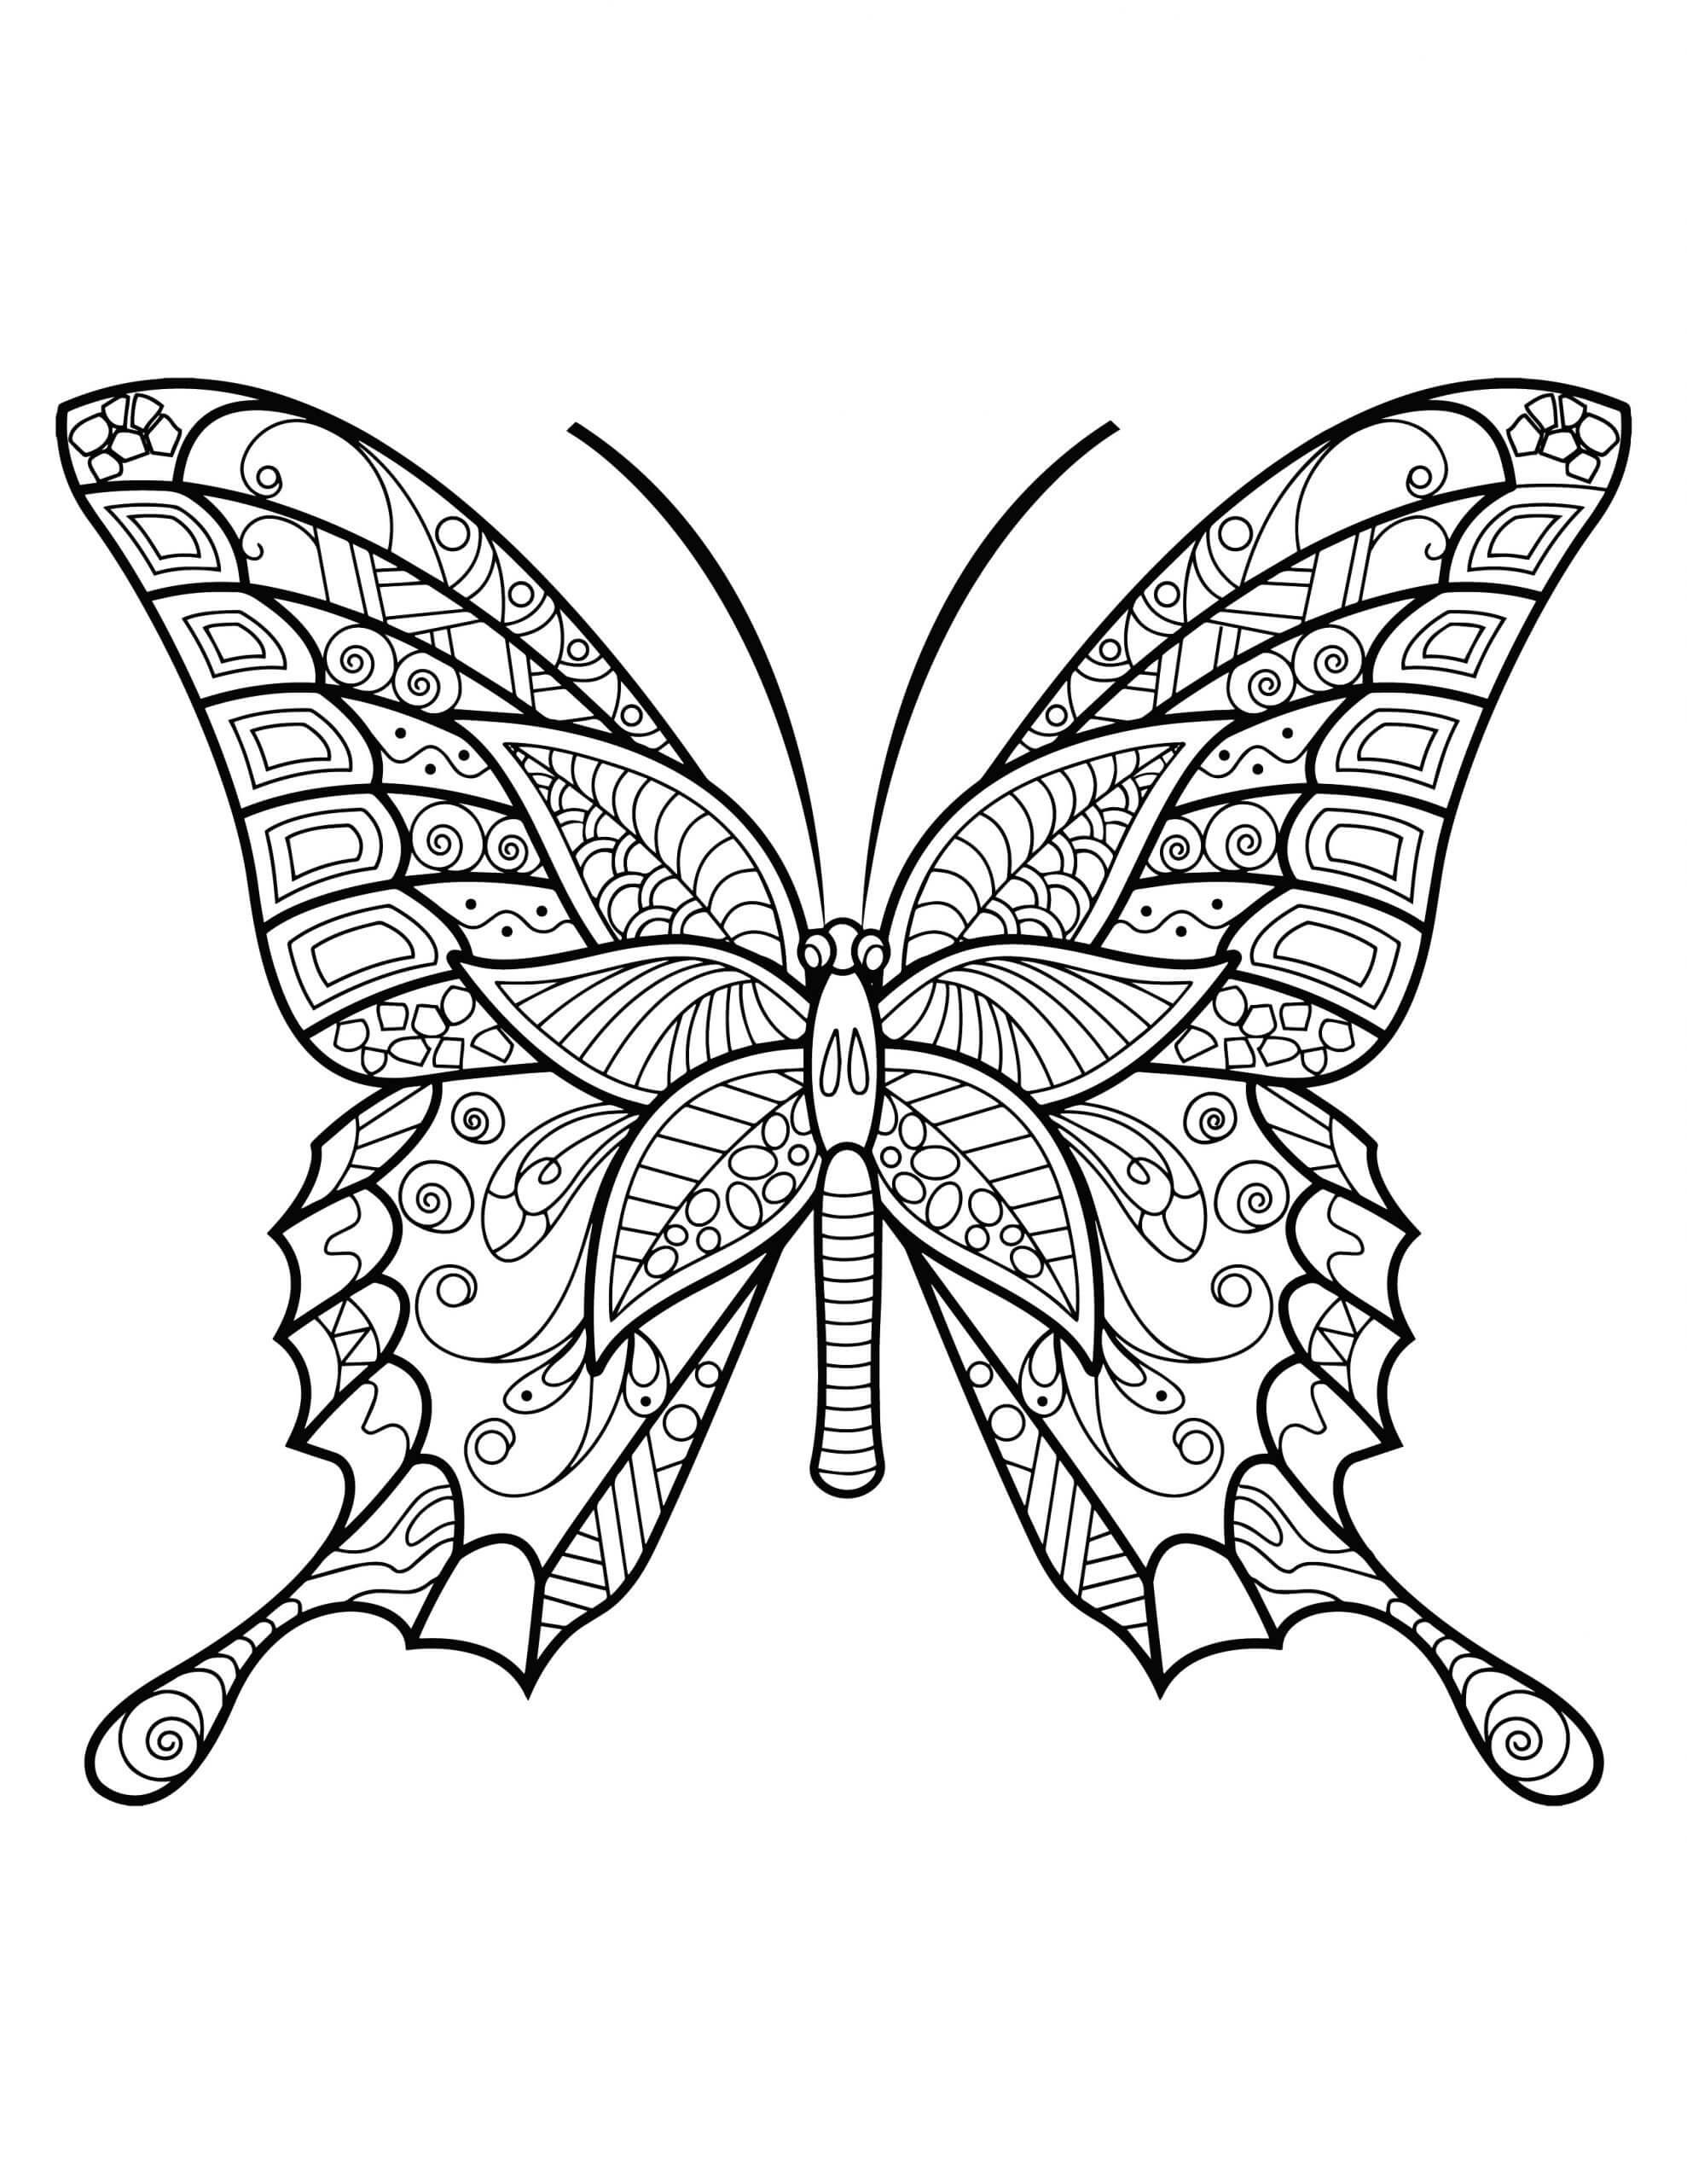 Mandala Butterfly Coloring Page - Sheet 2 Mandalas